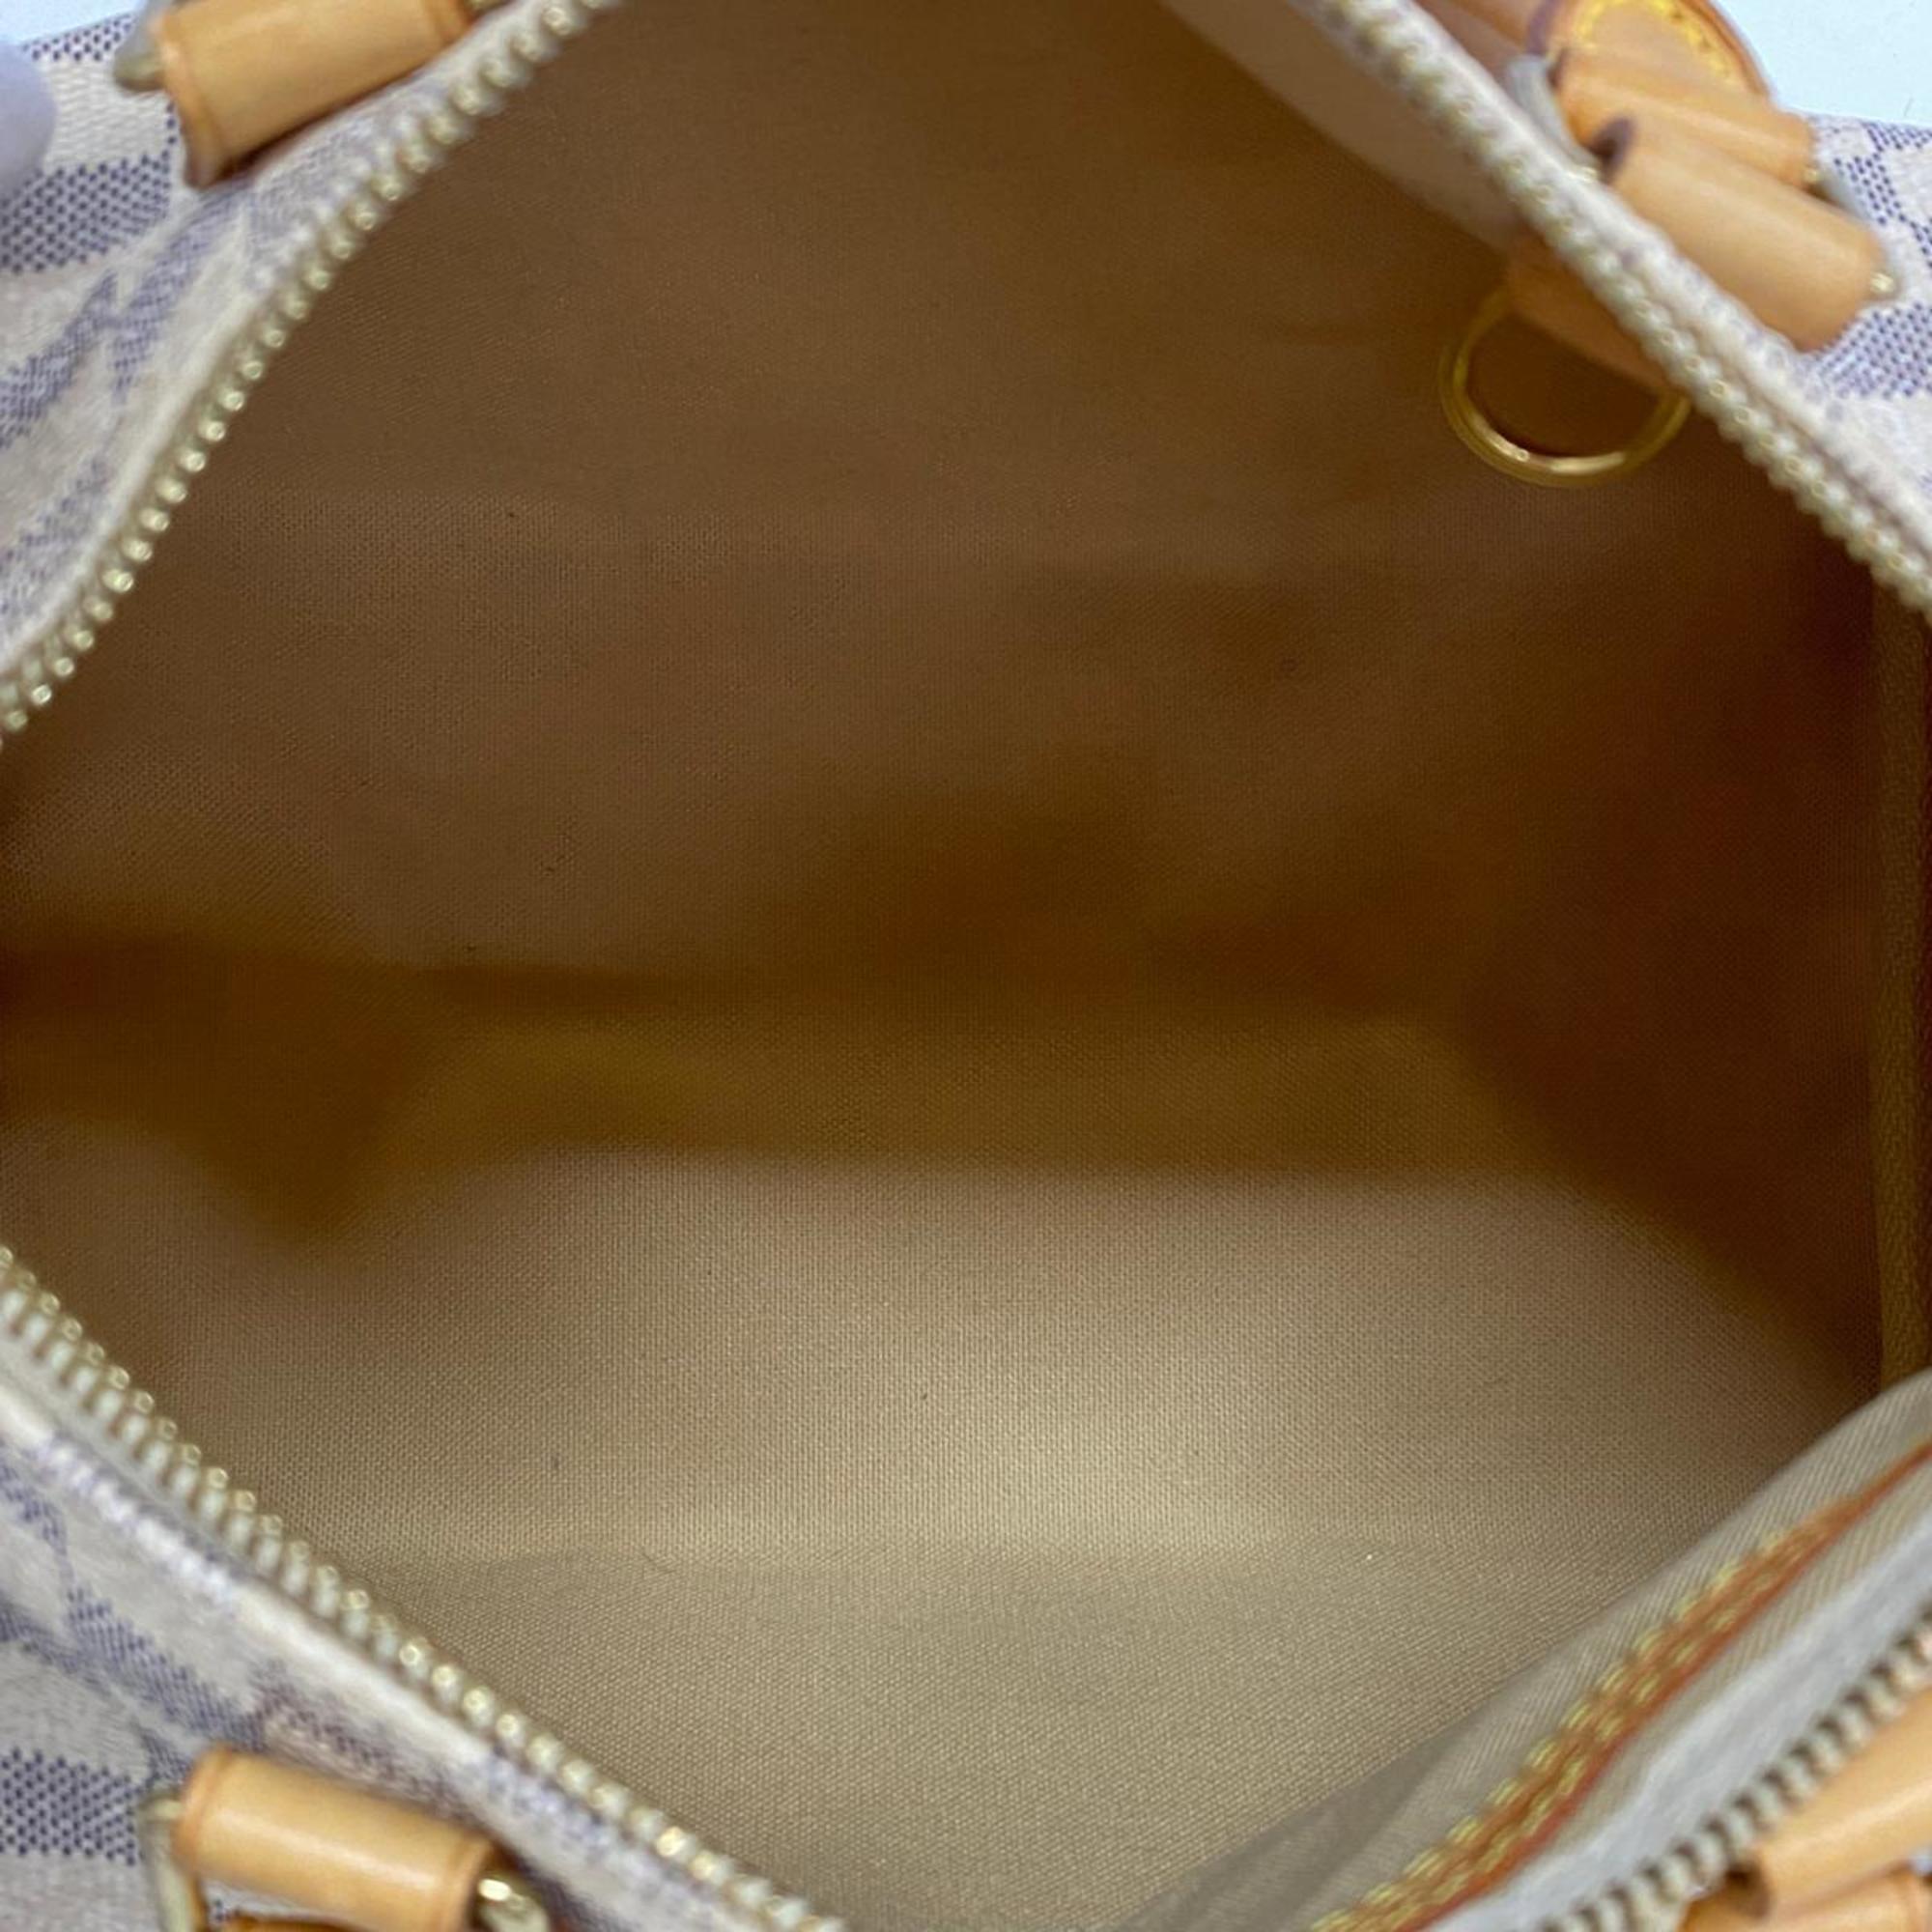 Louis Vuitton Handbag Damier Azur Speedy 25 N41371 White Ladies